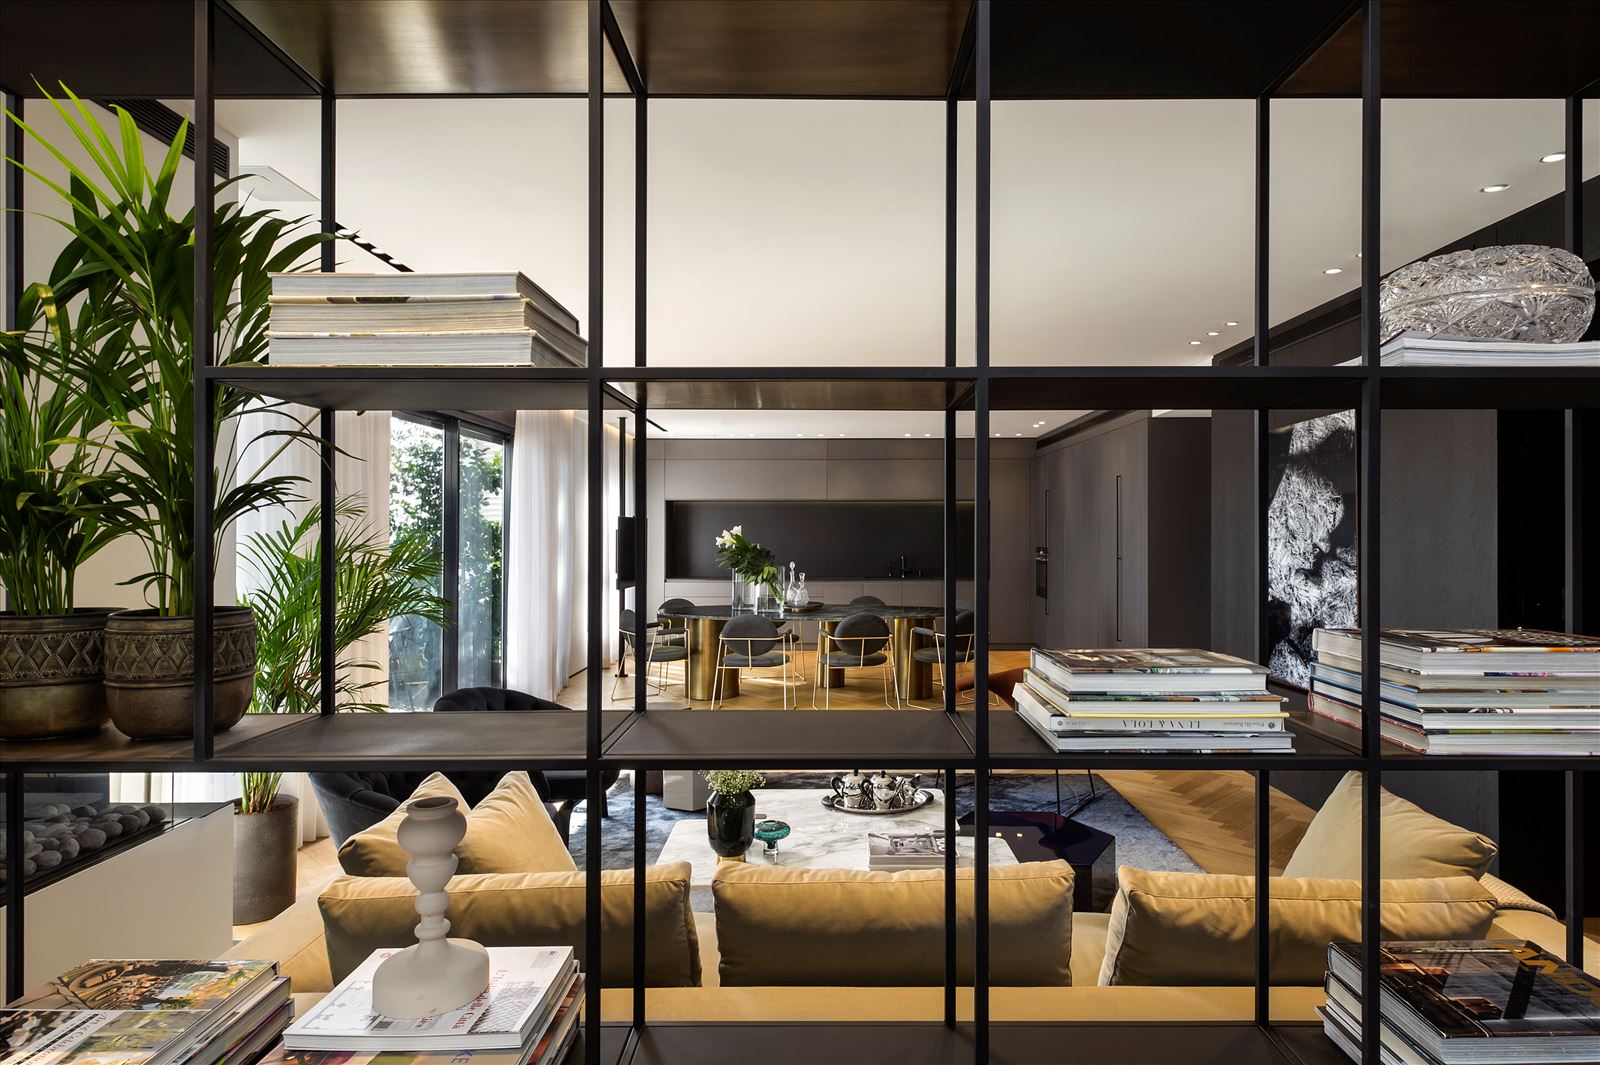 Penthouse - Petah Tikva מרחב הסלון מואר בגופי תאורה בתכנון דורי קמחי